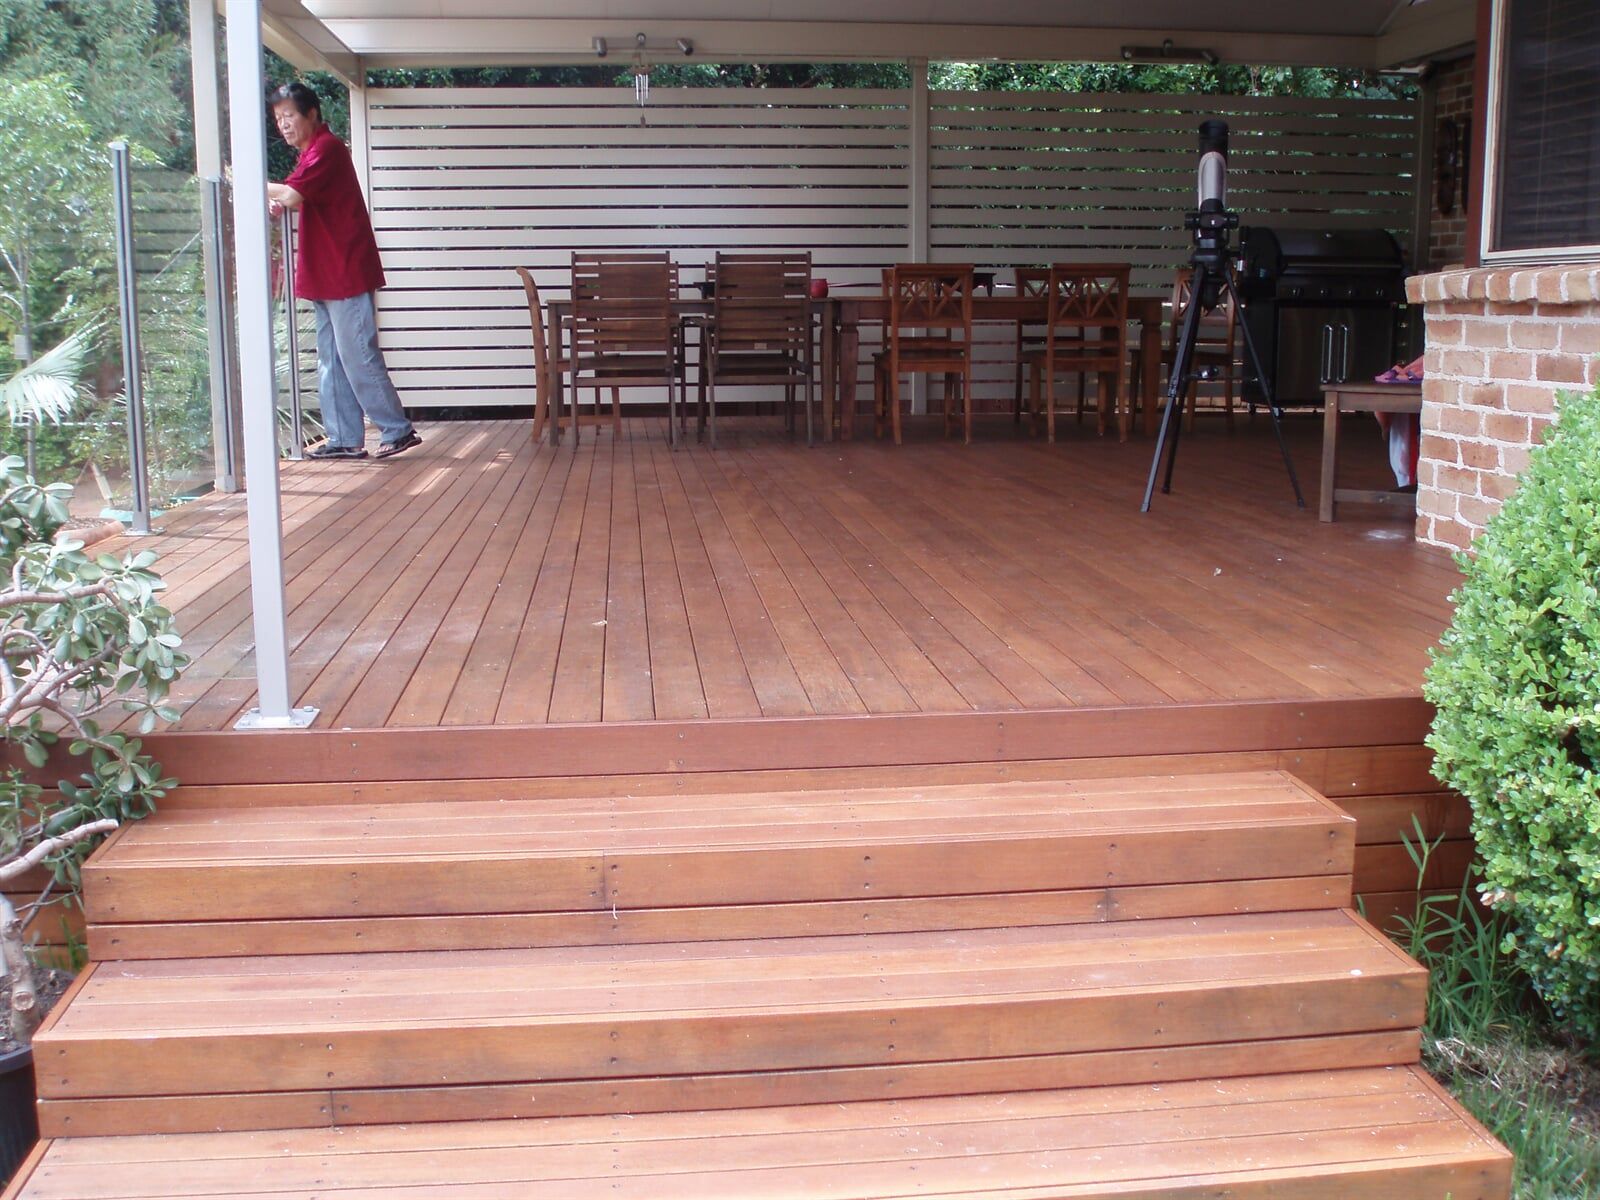 New timber patio build - Hunter and Mid Coast Patios